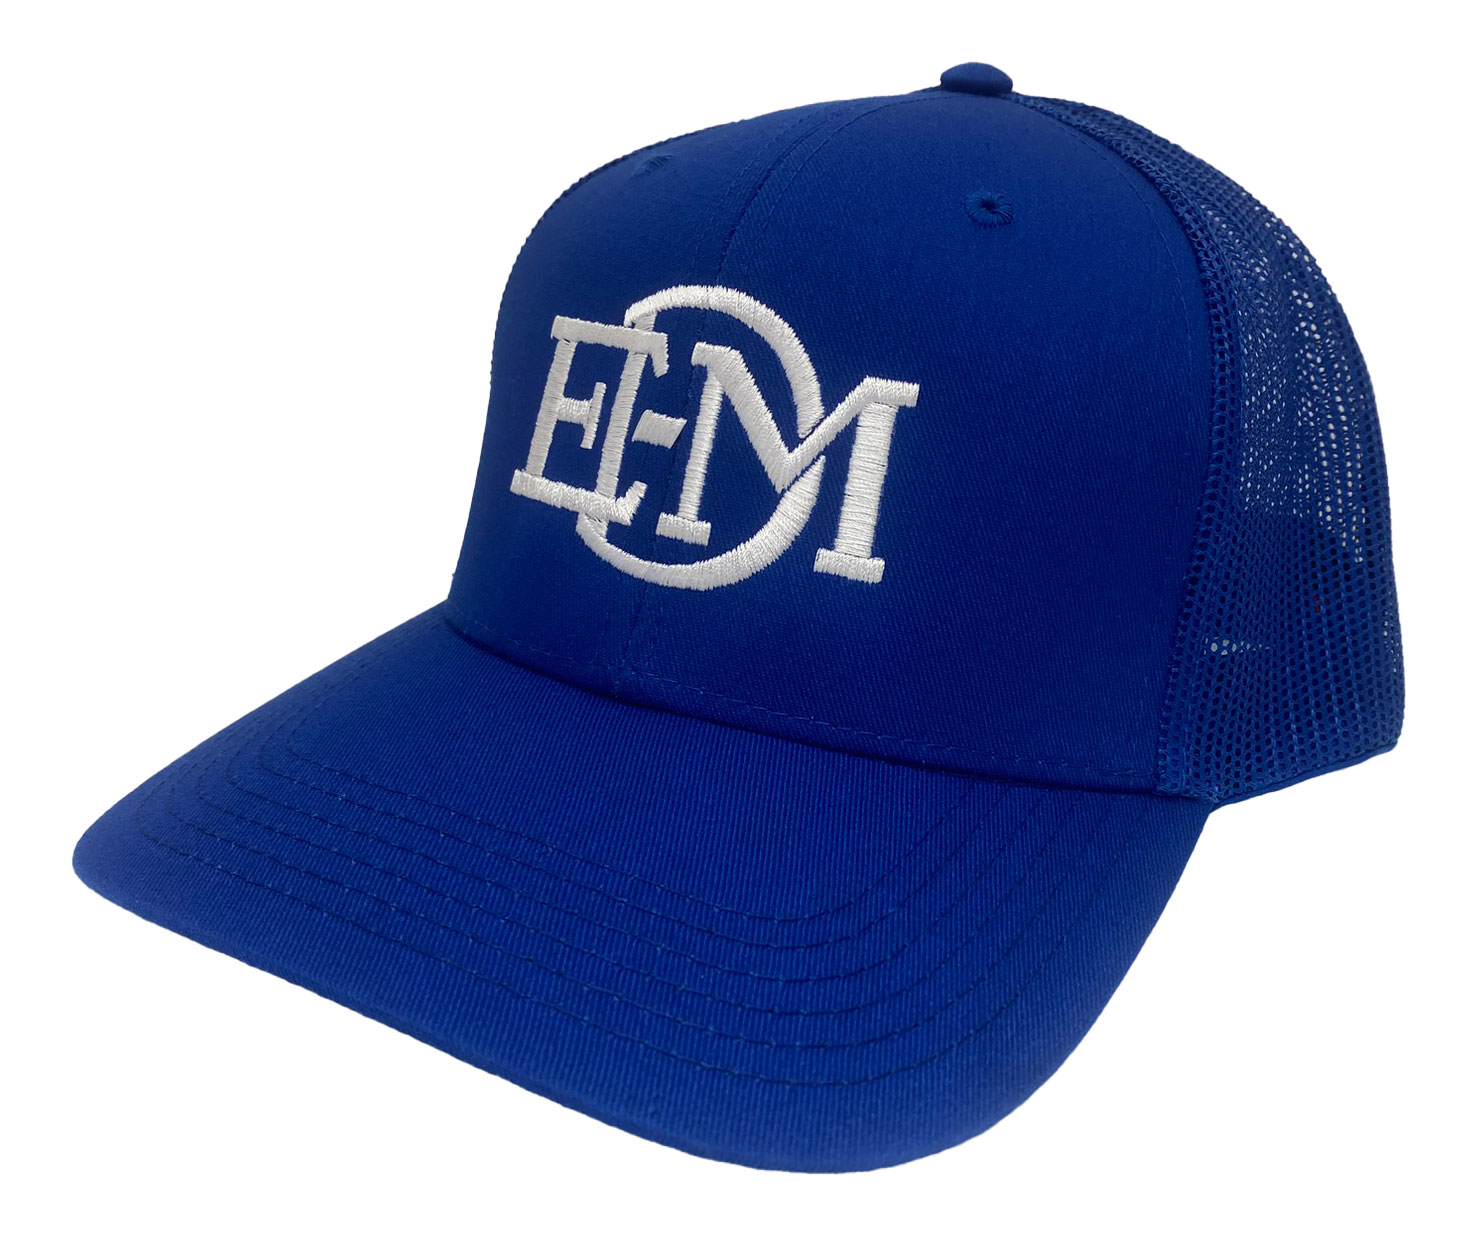 EMD Electro Motive Division Railroad Embroidered Cap Hat #40-1742M